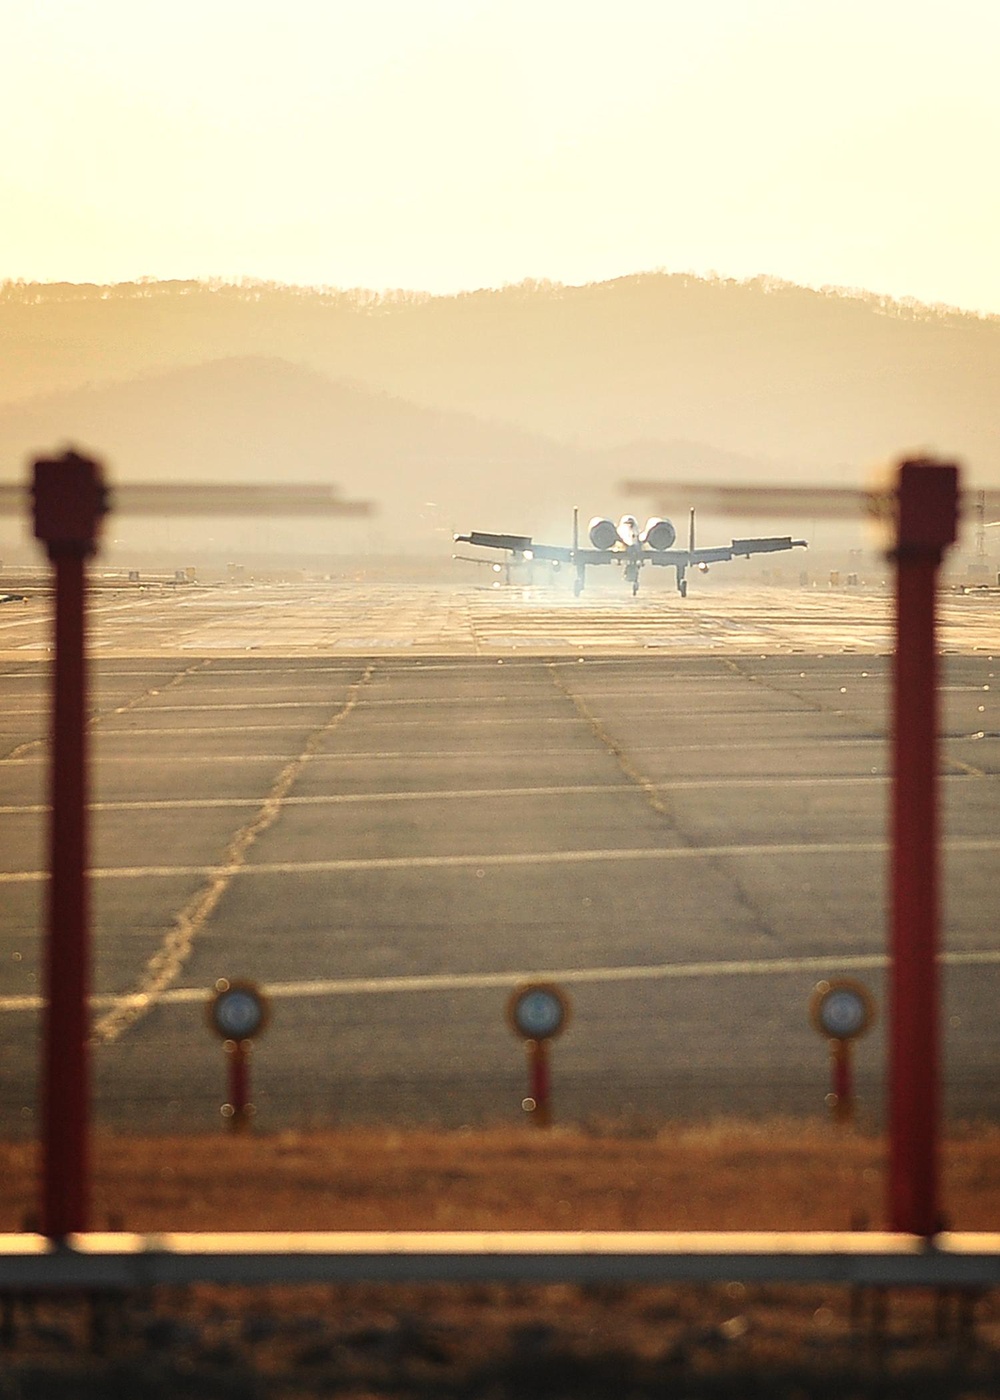 A-10 Arrival to Osan Air Base, Republic of Korea